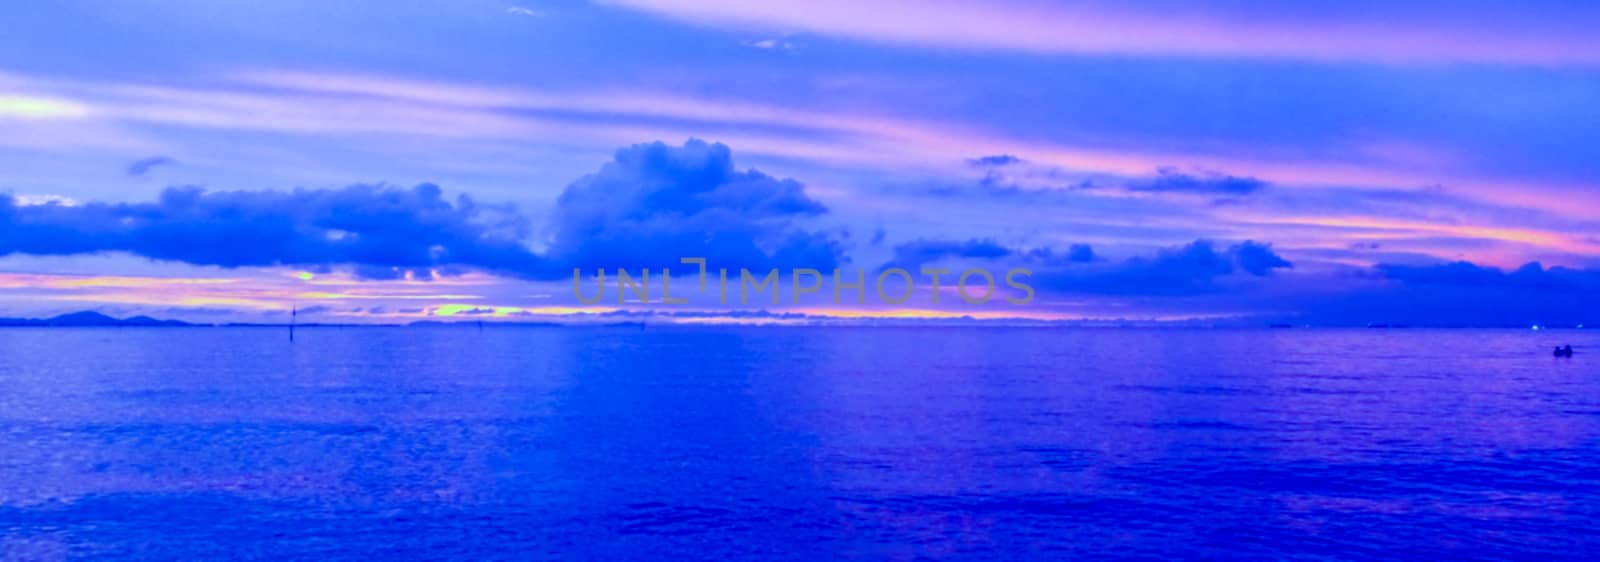 blur sea sunset panorama last light by Darkfox